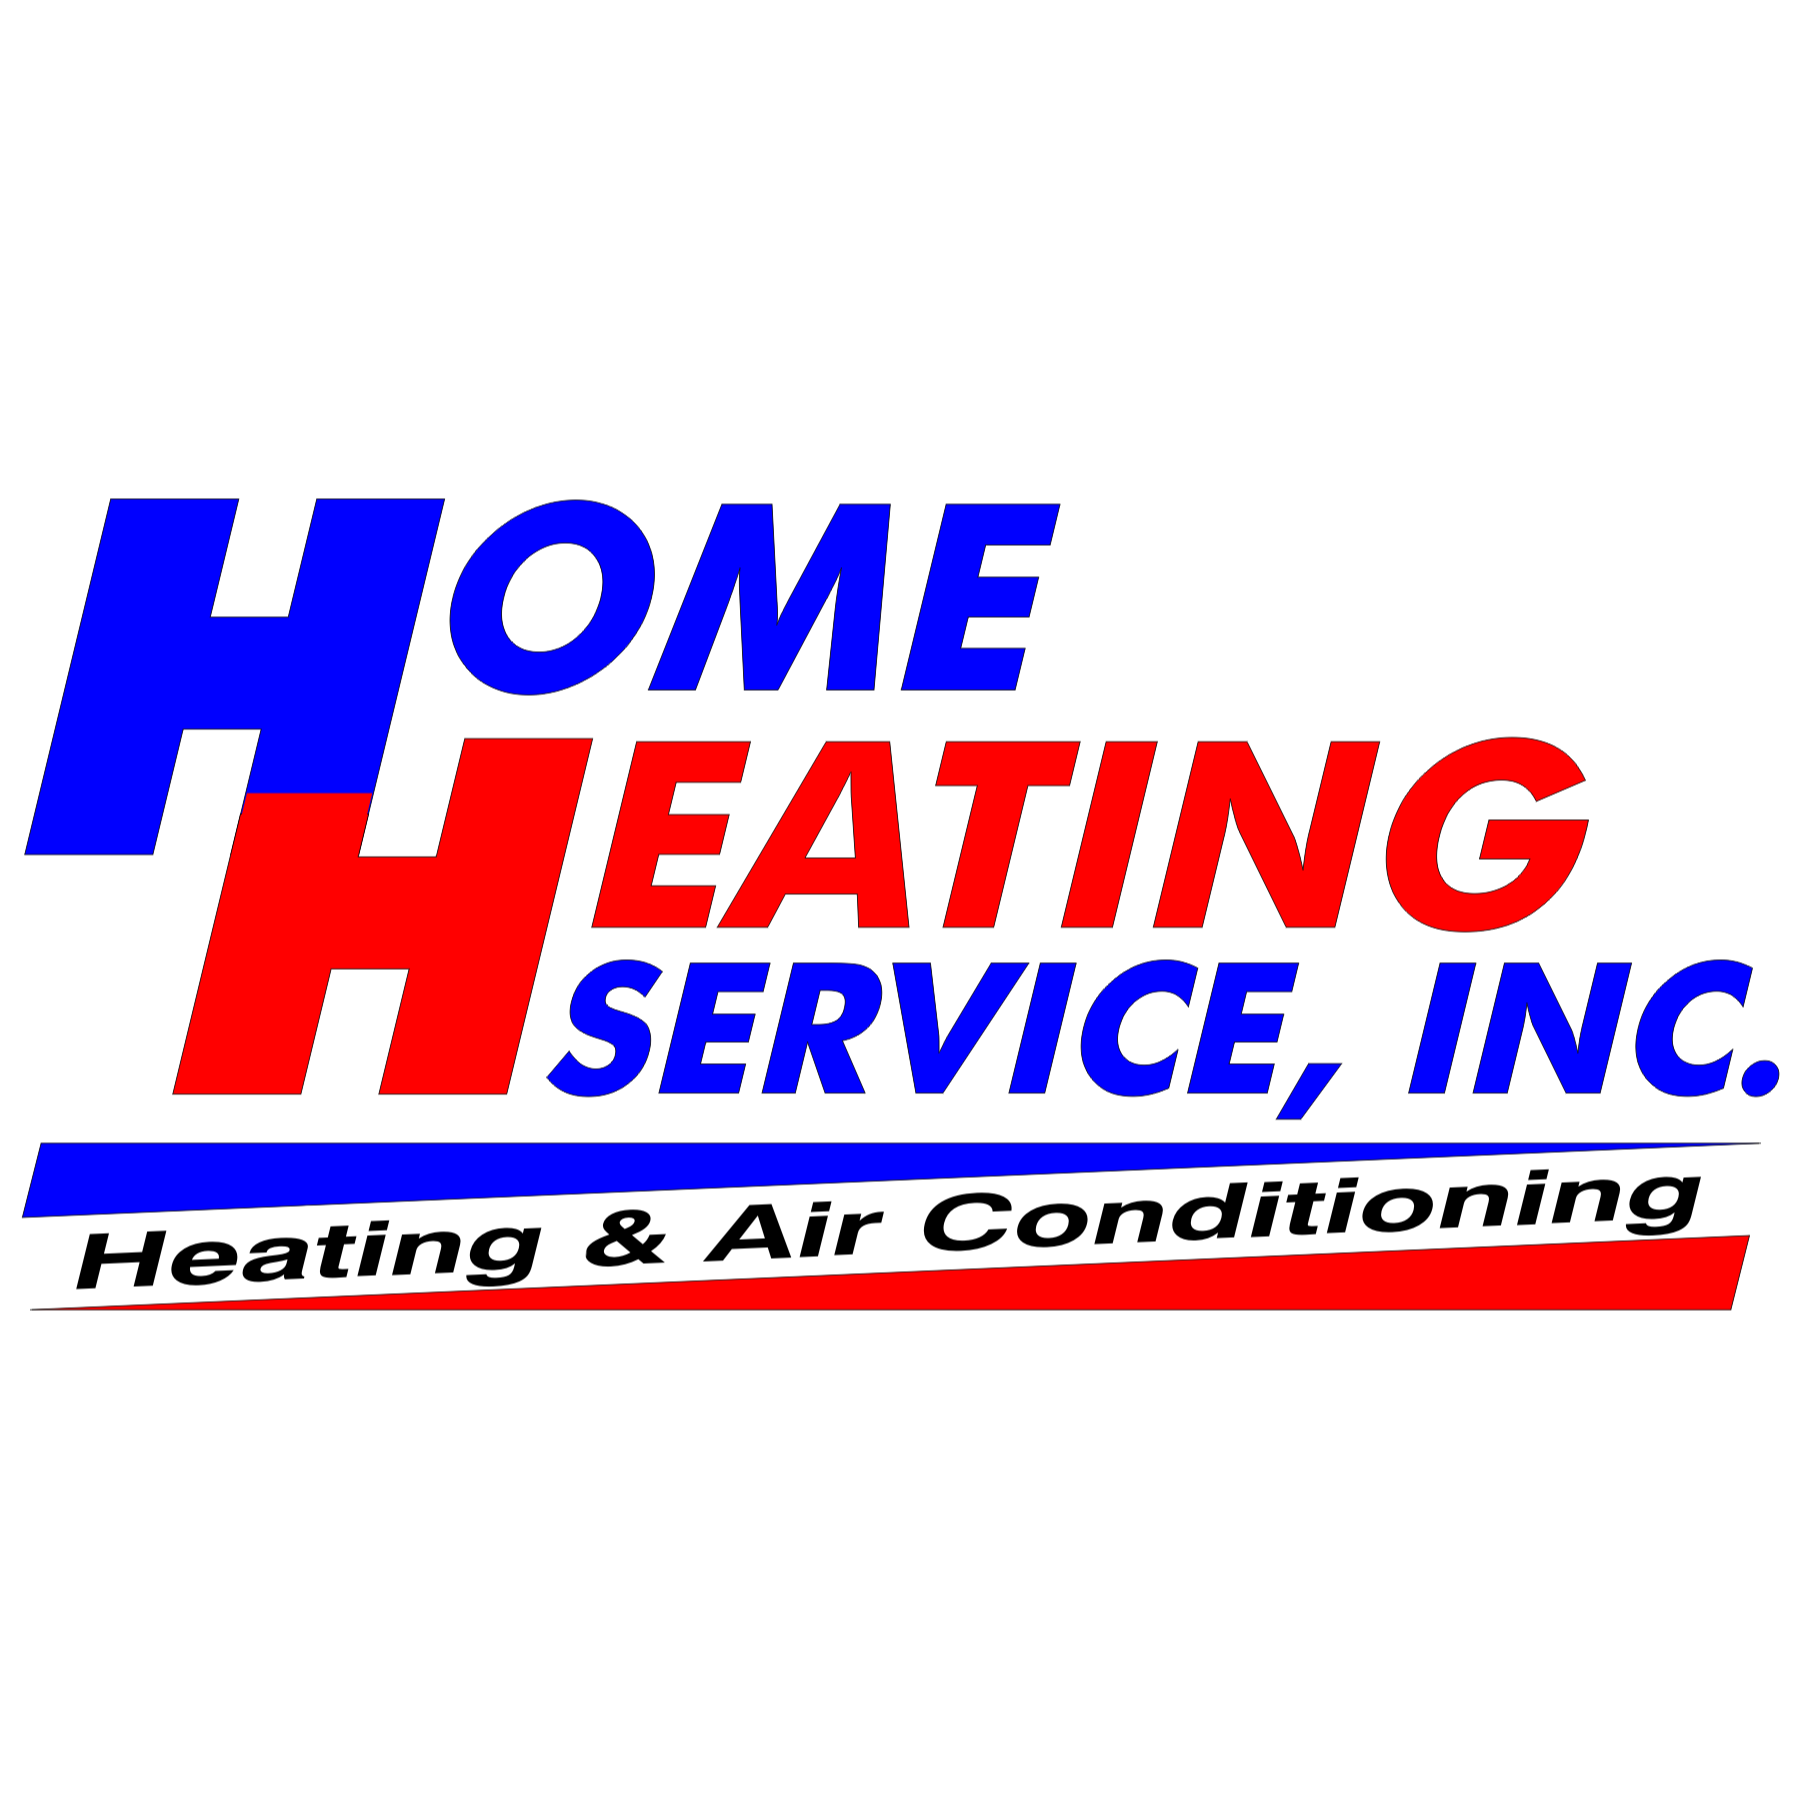 Home Heating Service, Inc.